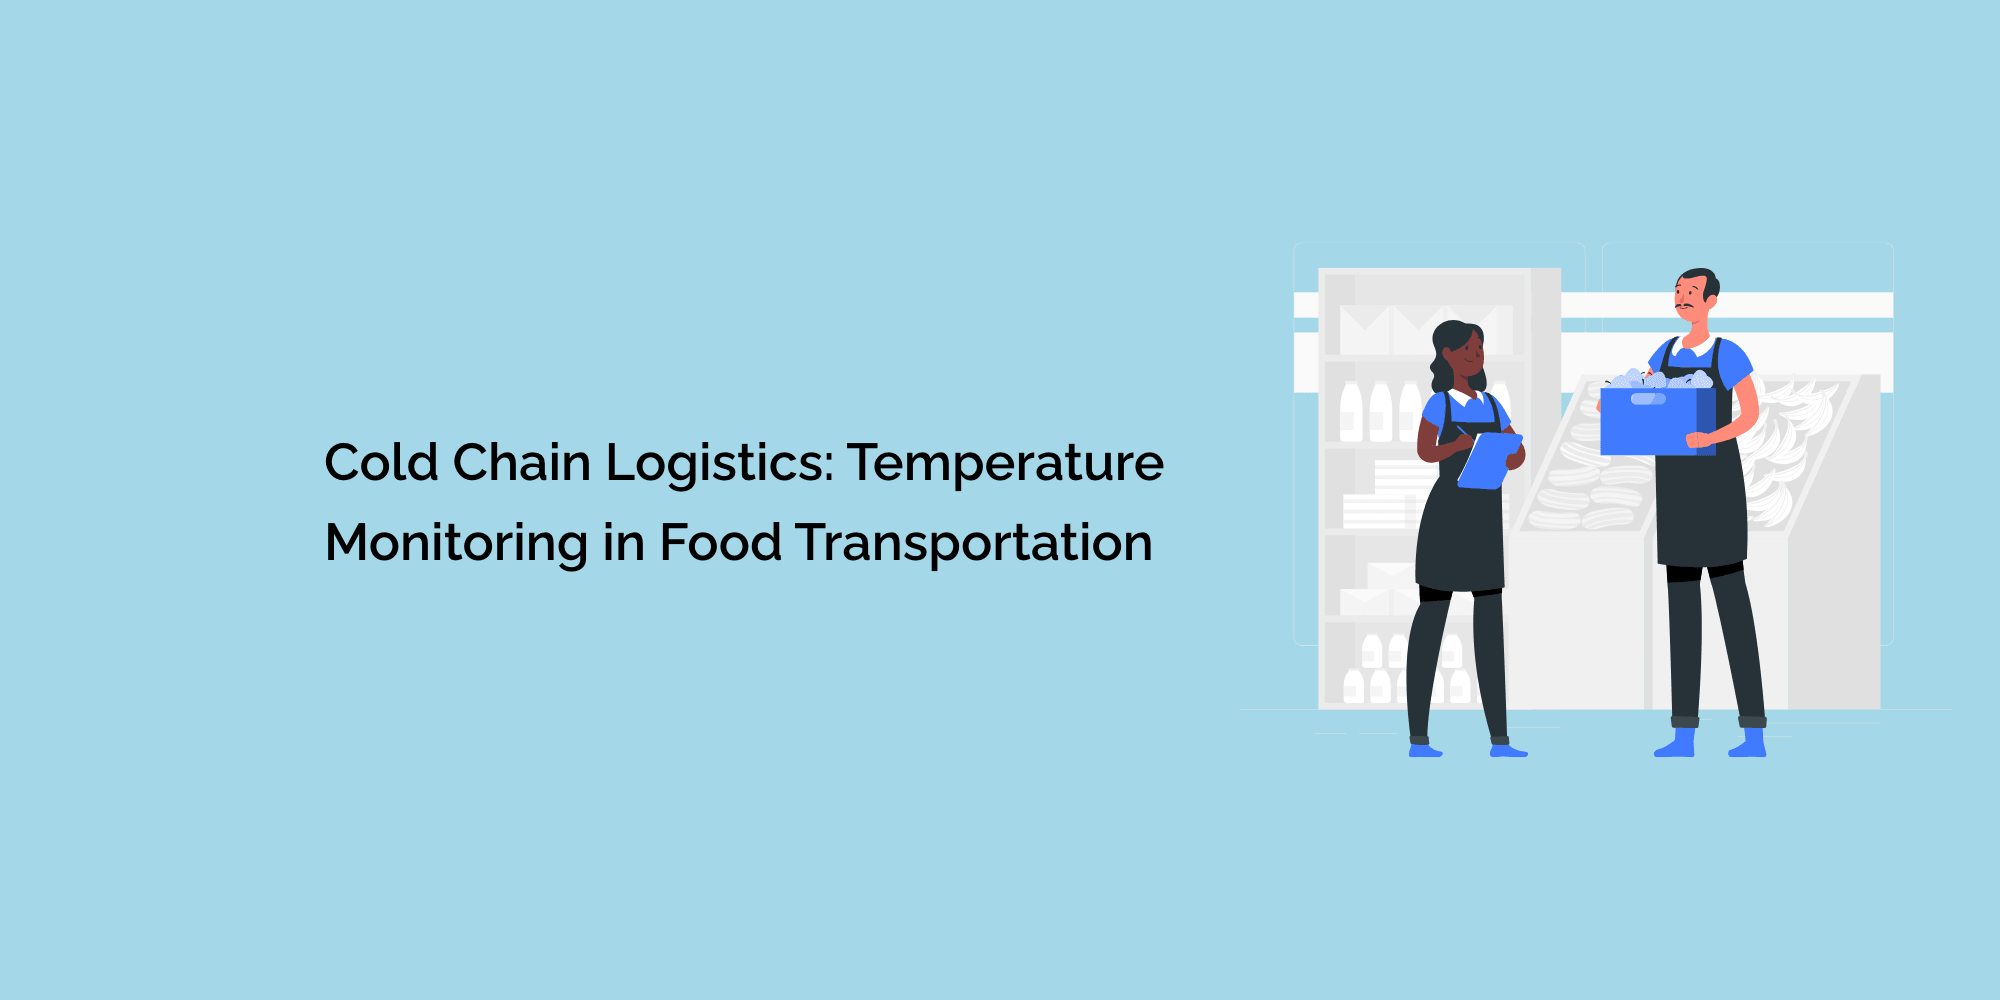 Cold Chain Logistics: Temperature Monitoring in Food Transportation